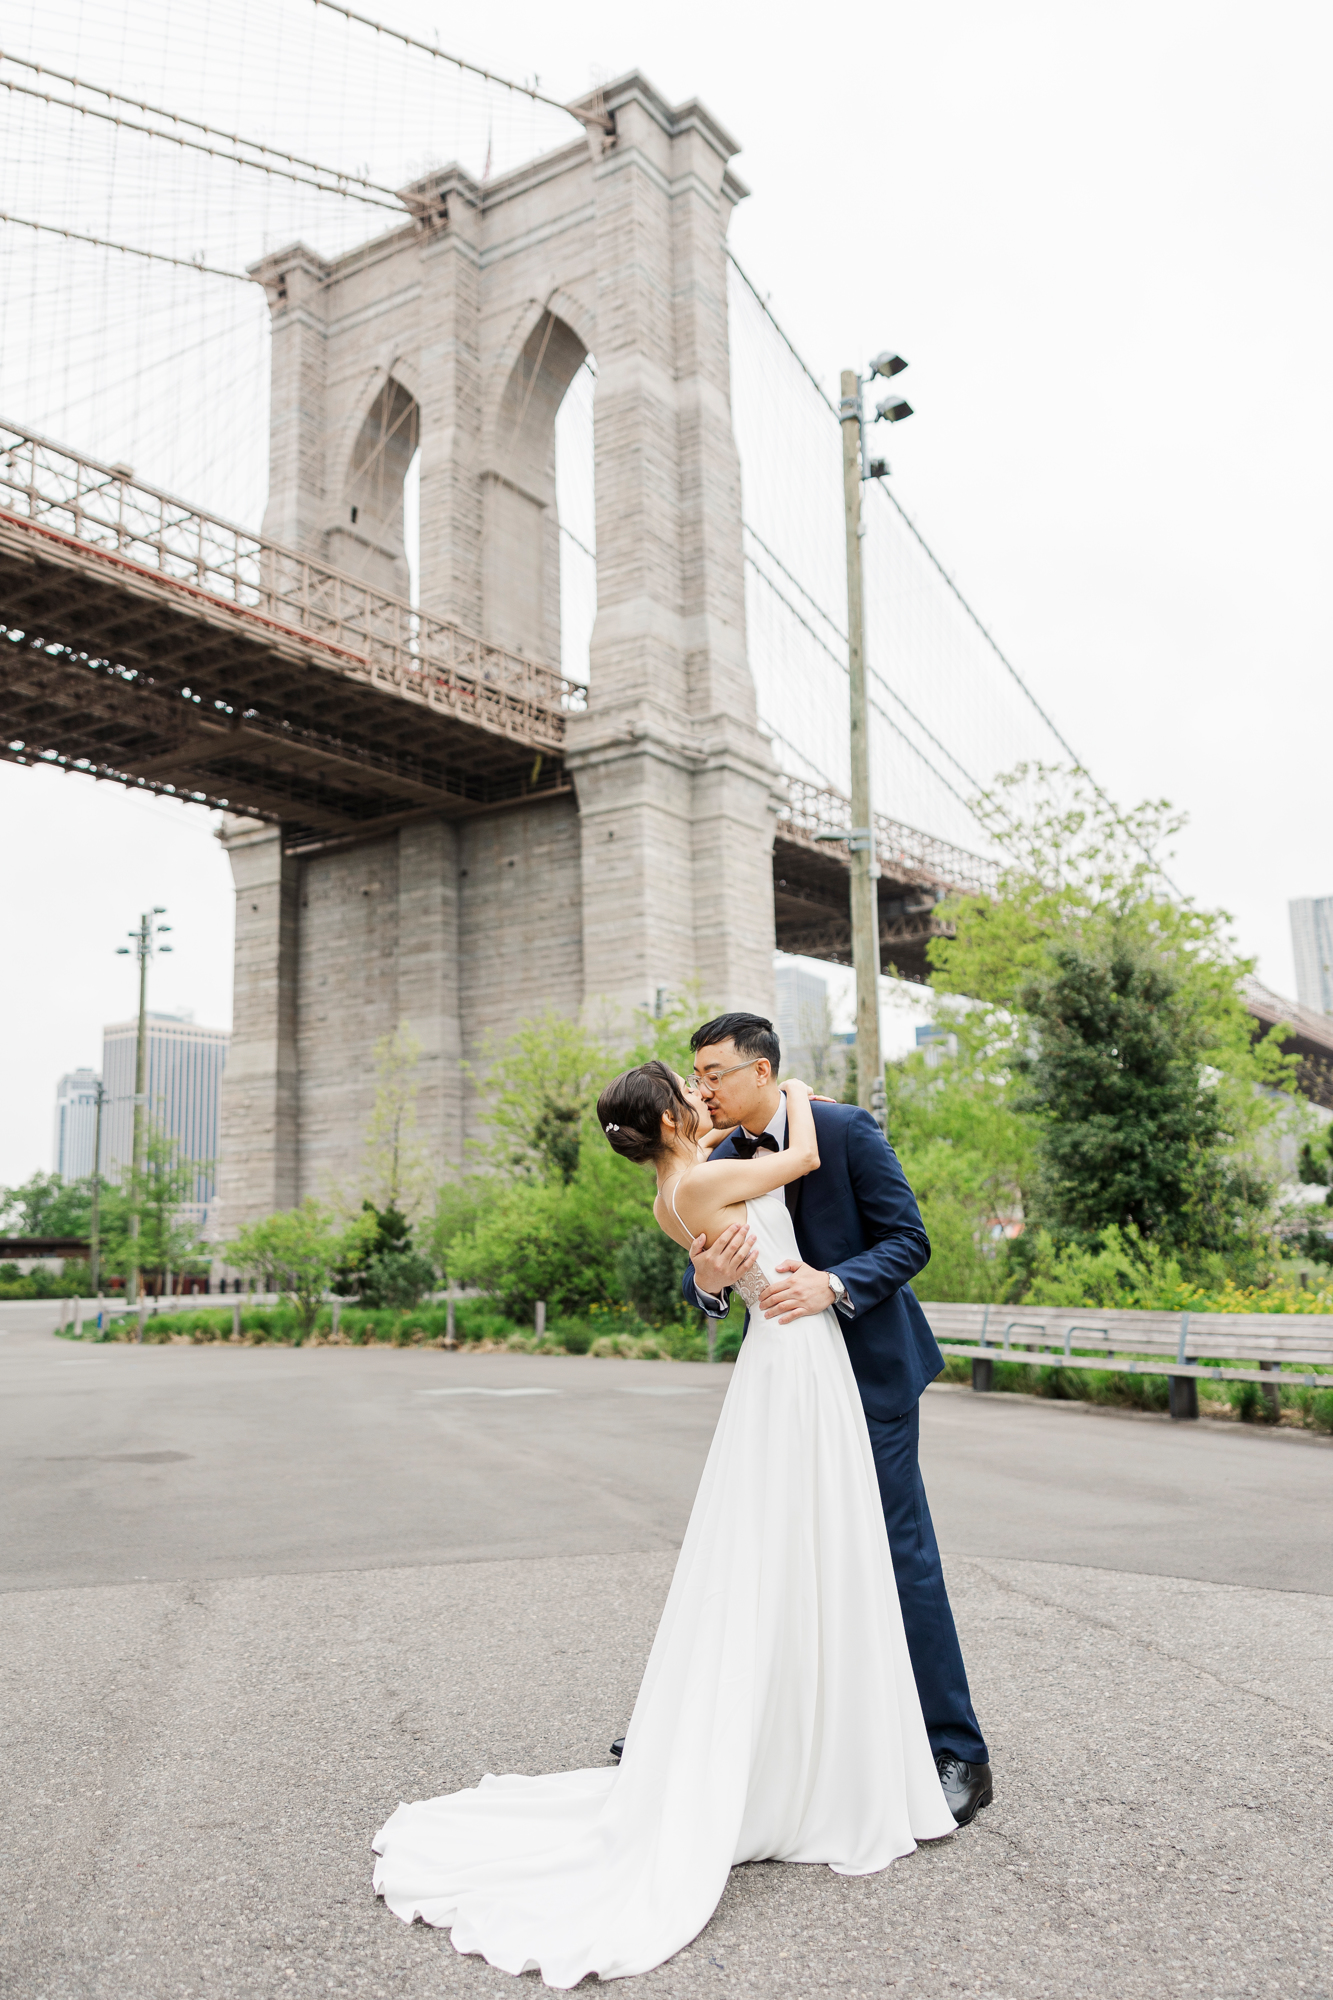 Incredible Deity Wedding in Brooklyn Bridge Park